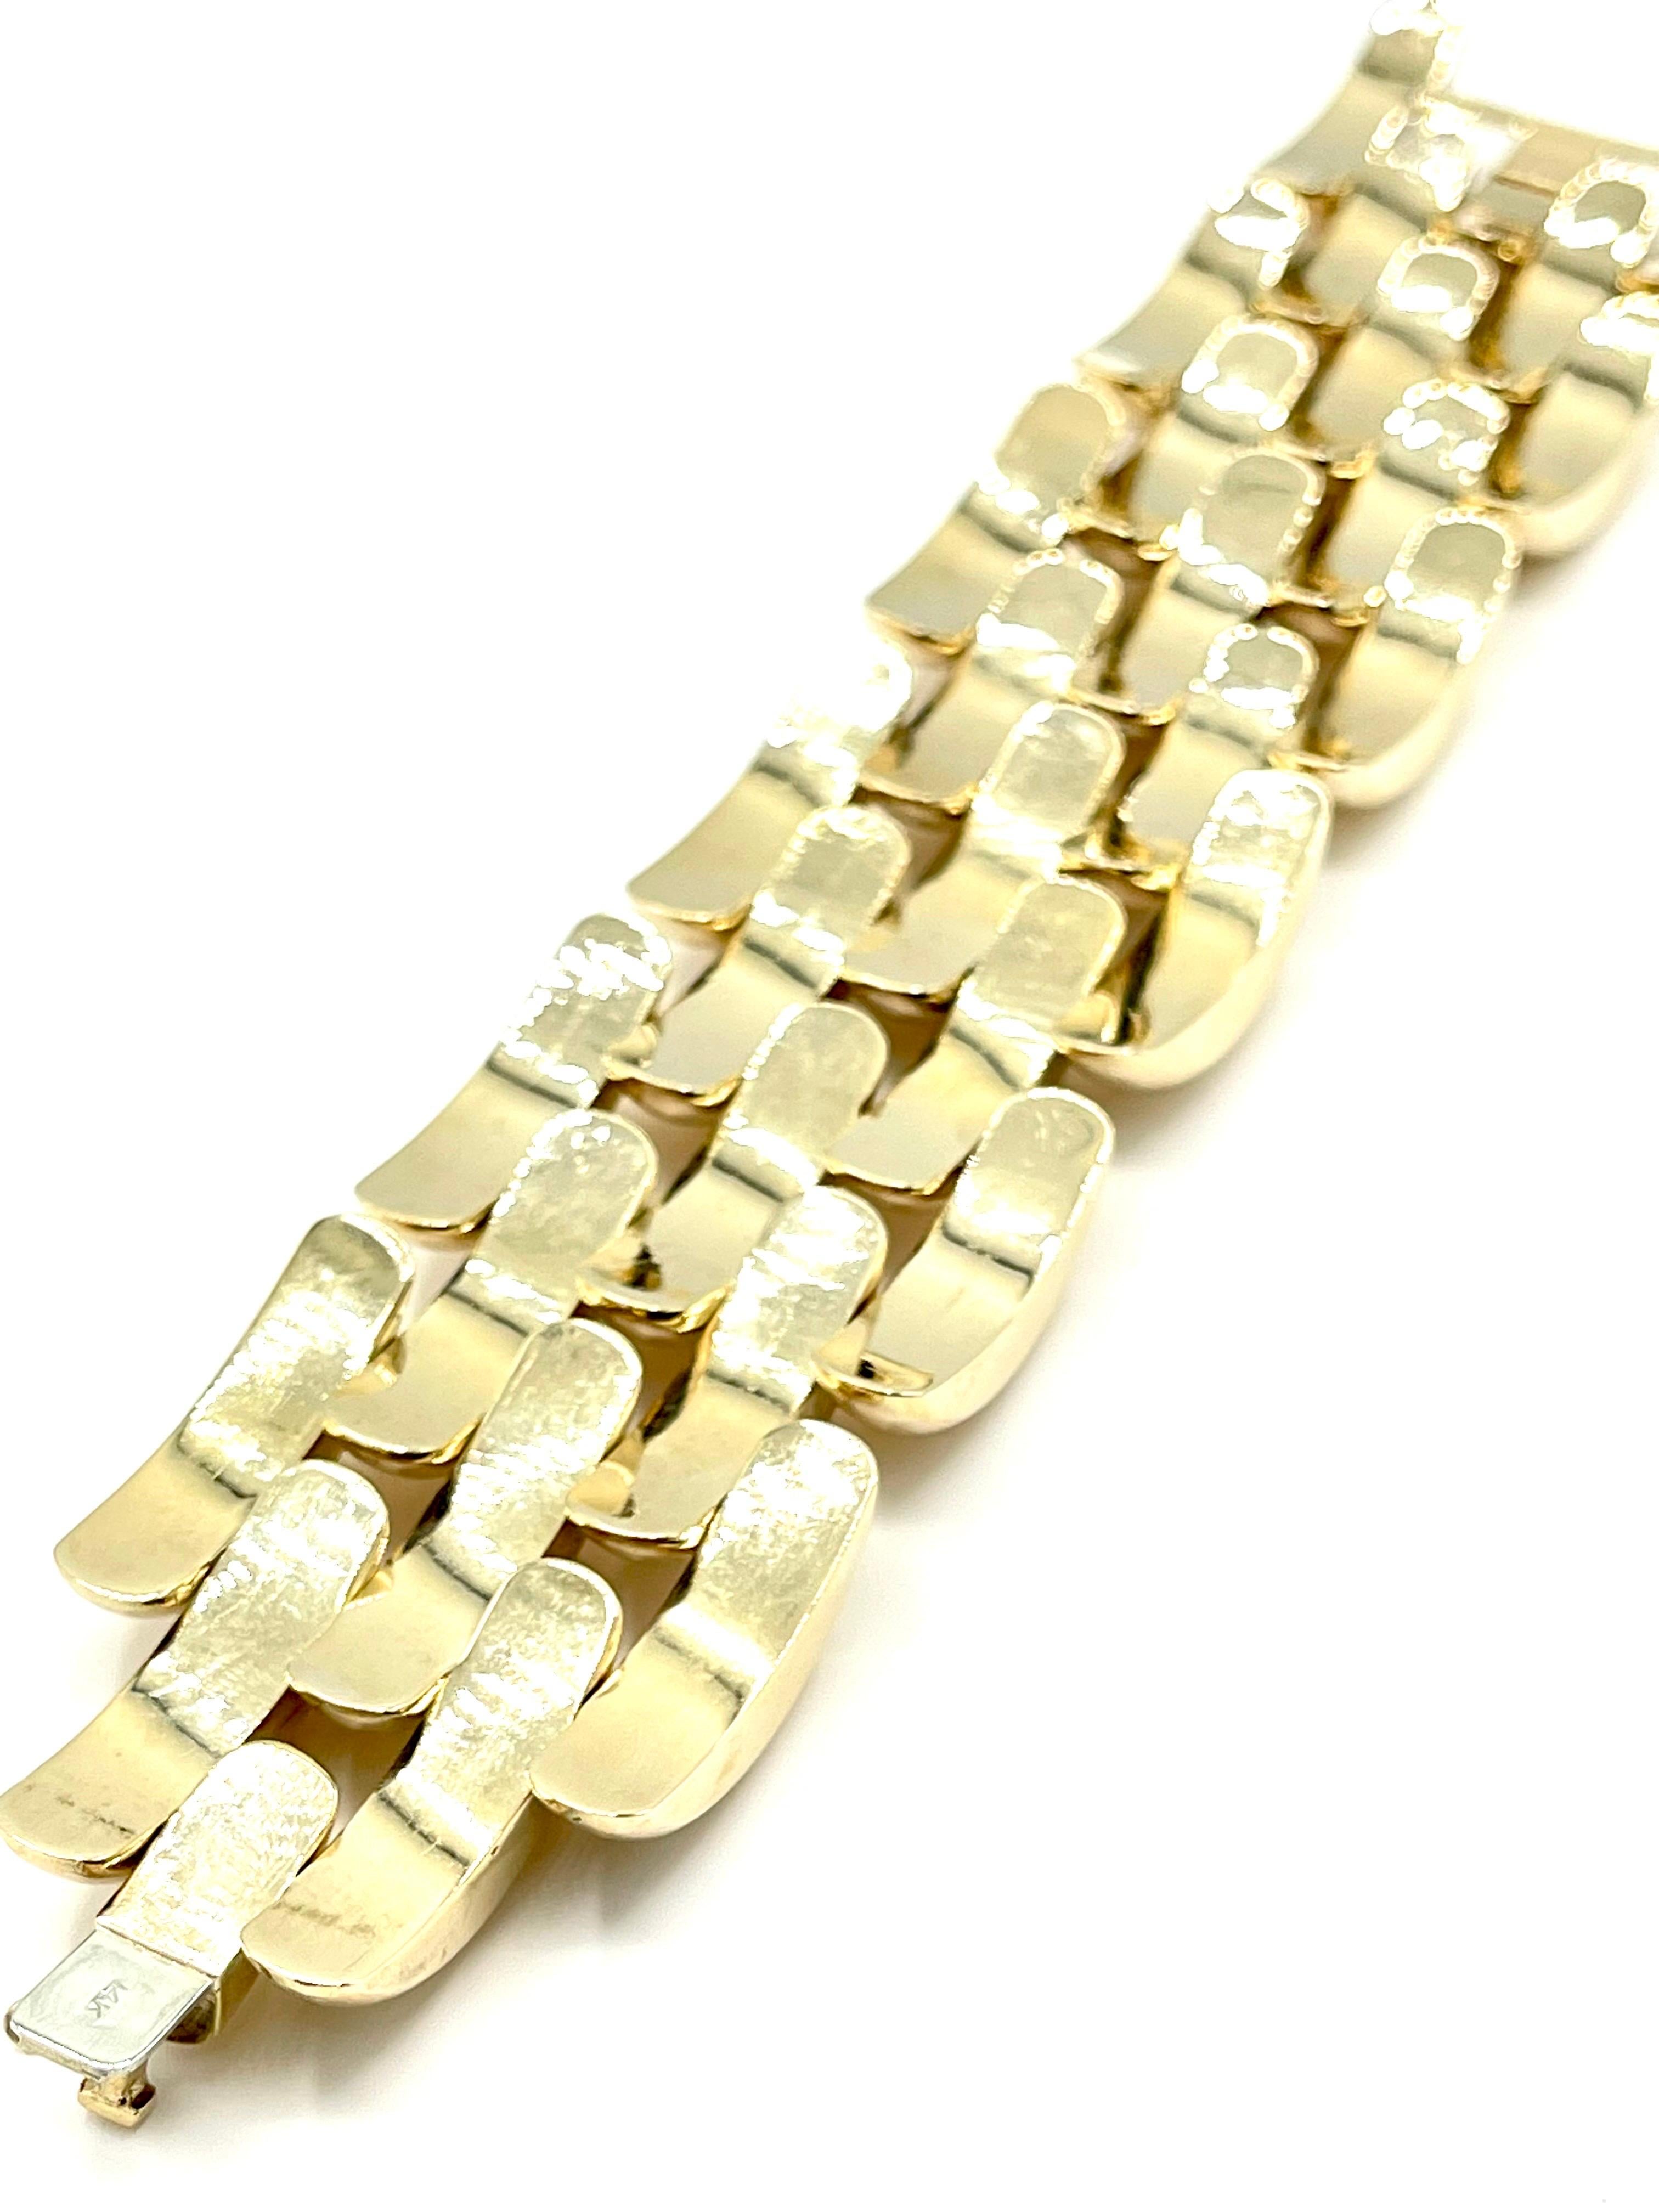 Retro Wide Five Row Link Bracelet in 14K Yellow Gold